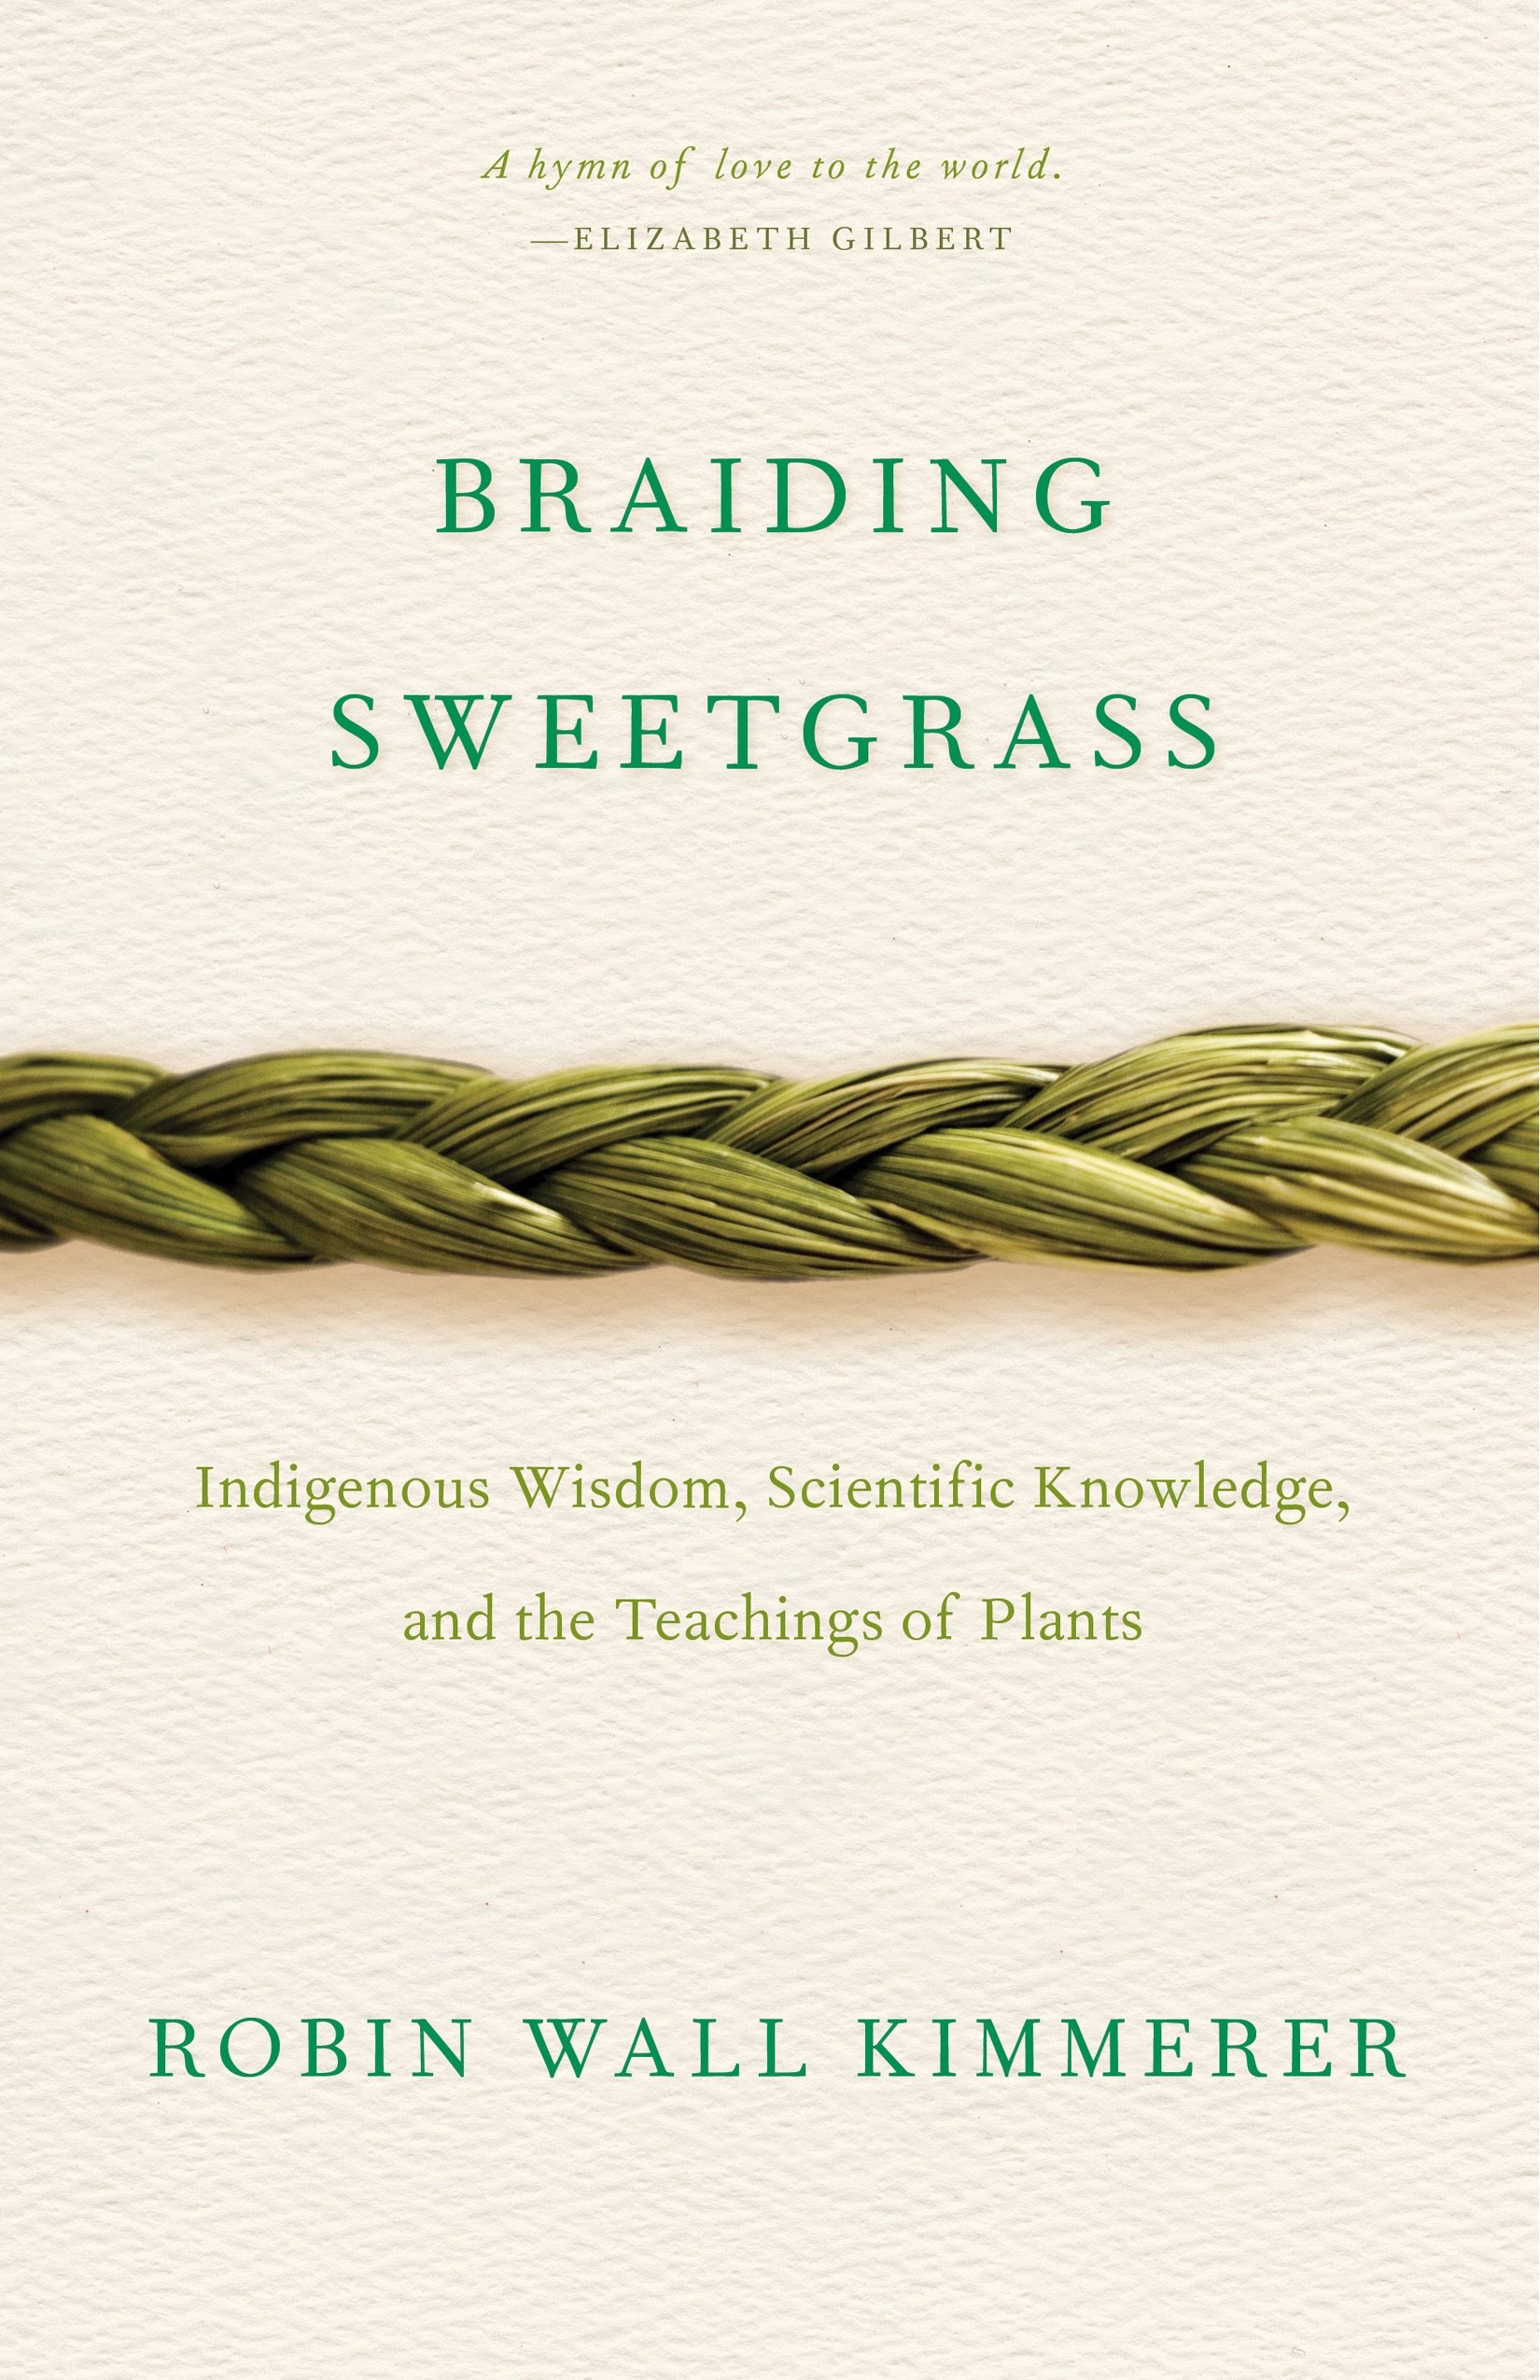 Robin Wall Kimmerer, Braiding Sweetgrass